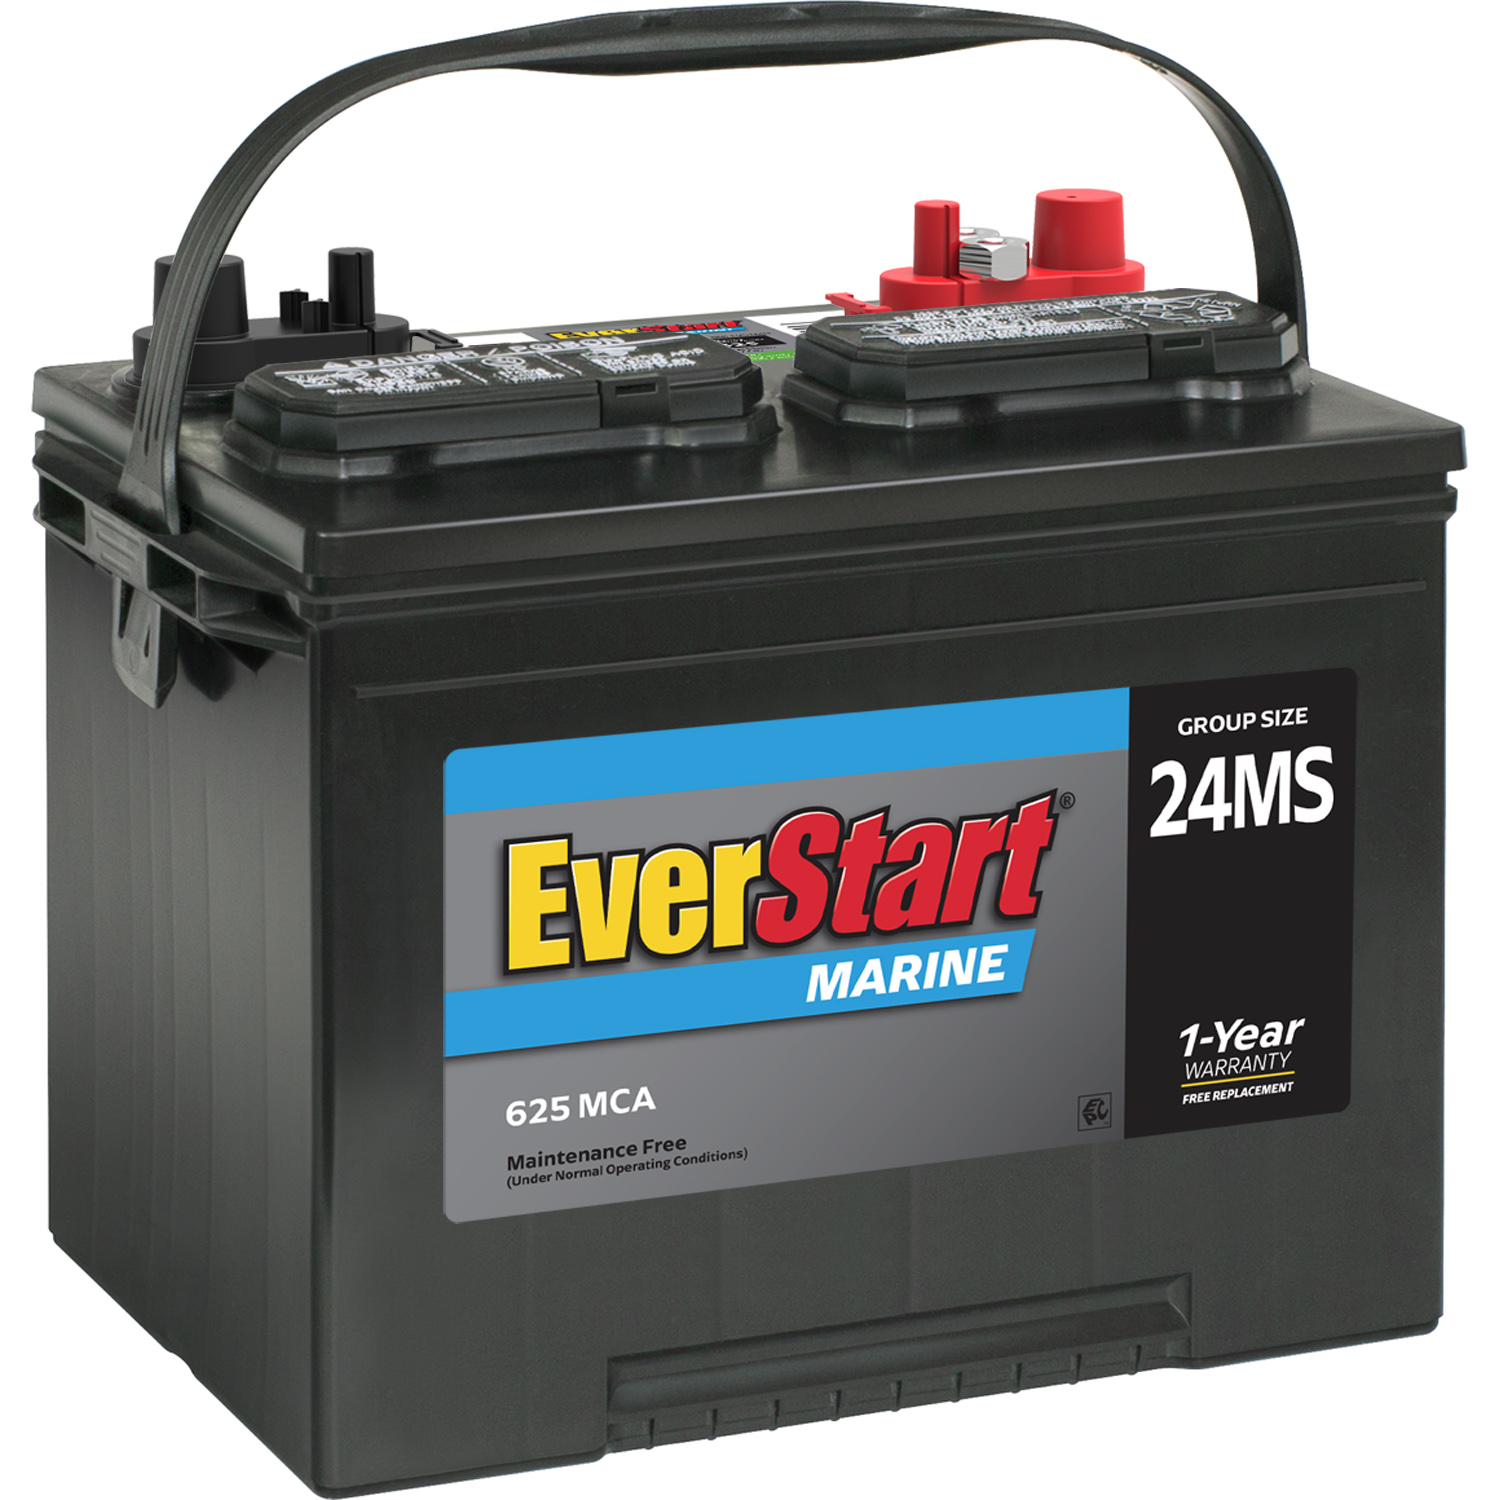 EverStart Lead Acid Marine Starting Battery, Group Size 24MS 12 Volt, 1000 MCA - image 1 of 9